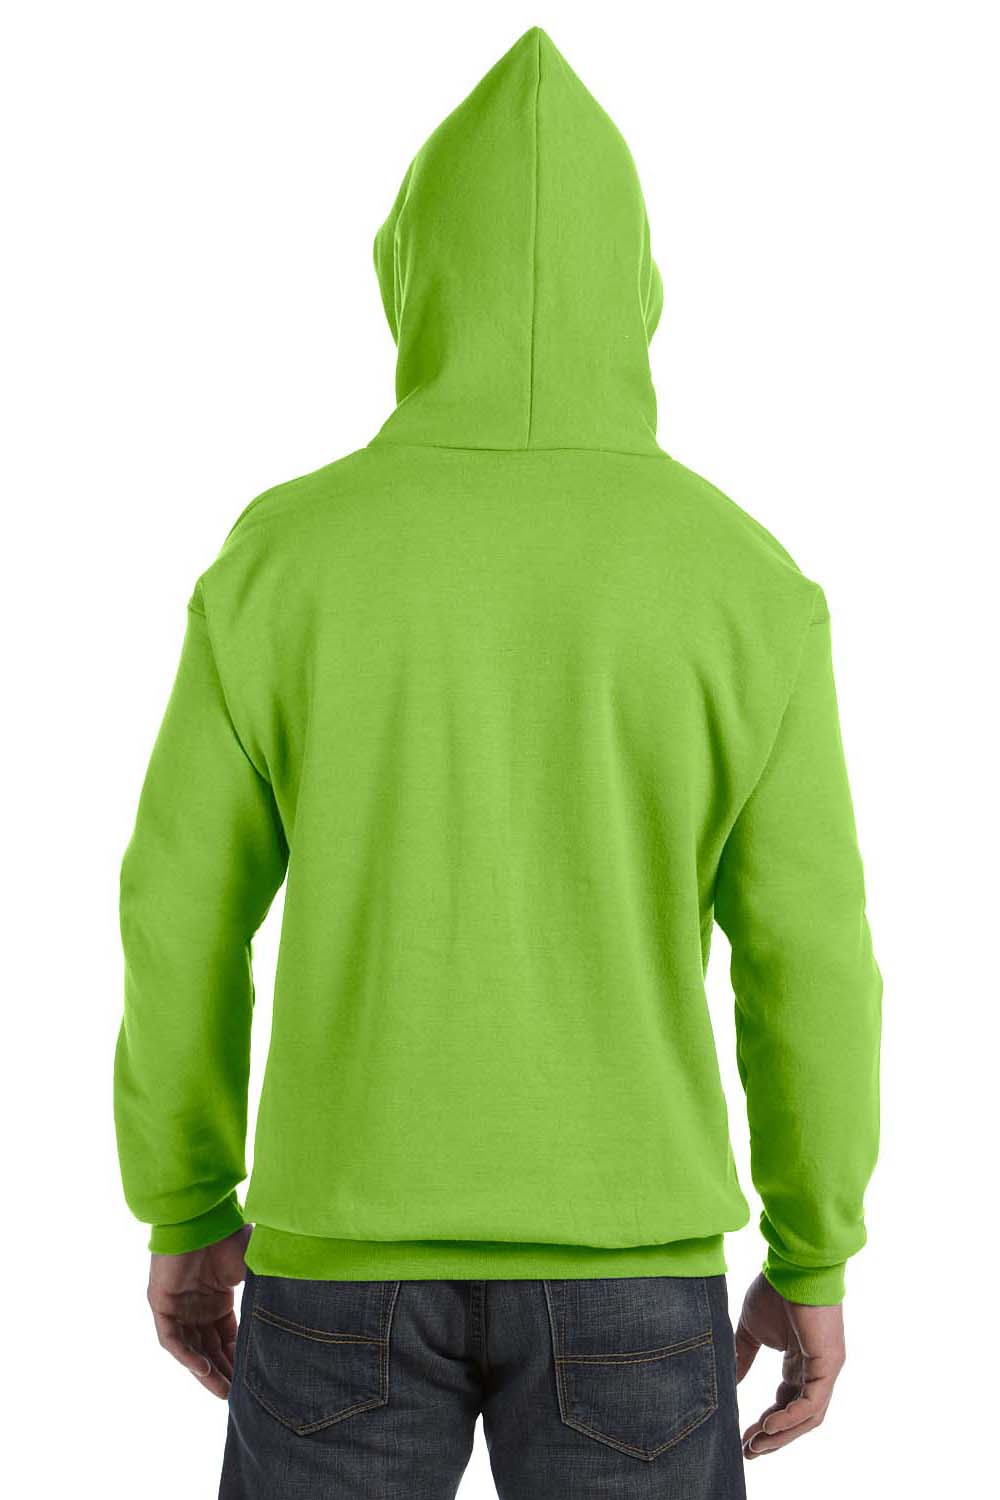 Hanes P170 Mens EcoSmart Print Pro XP Hooded Sweatshirt Hoodie Lime Green Back